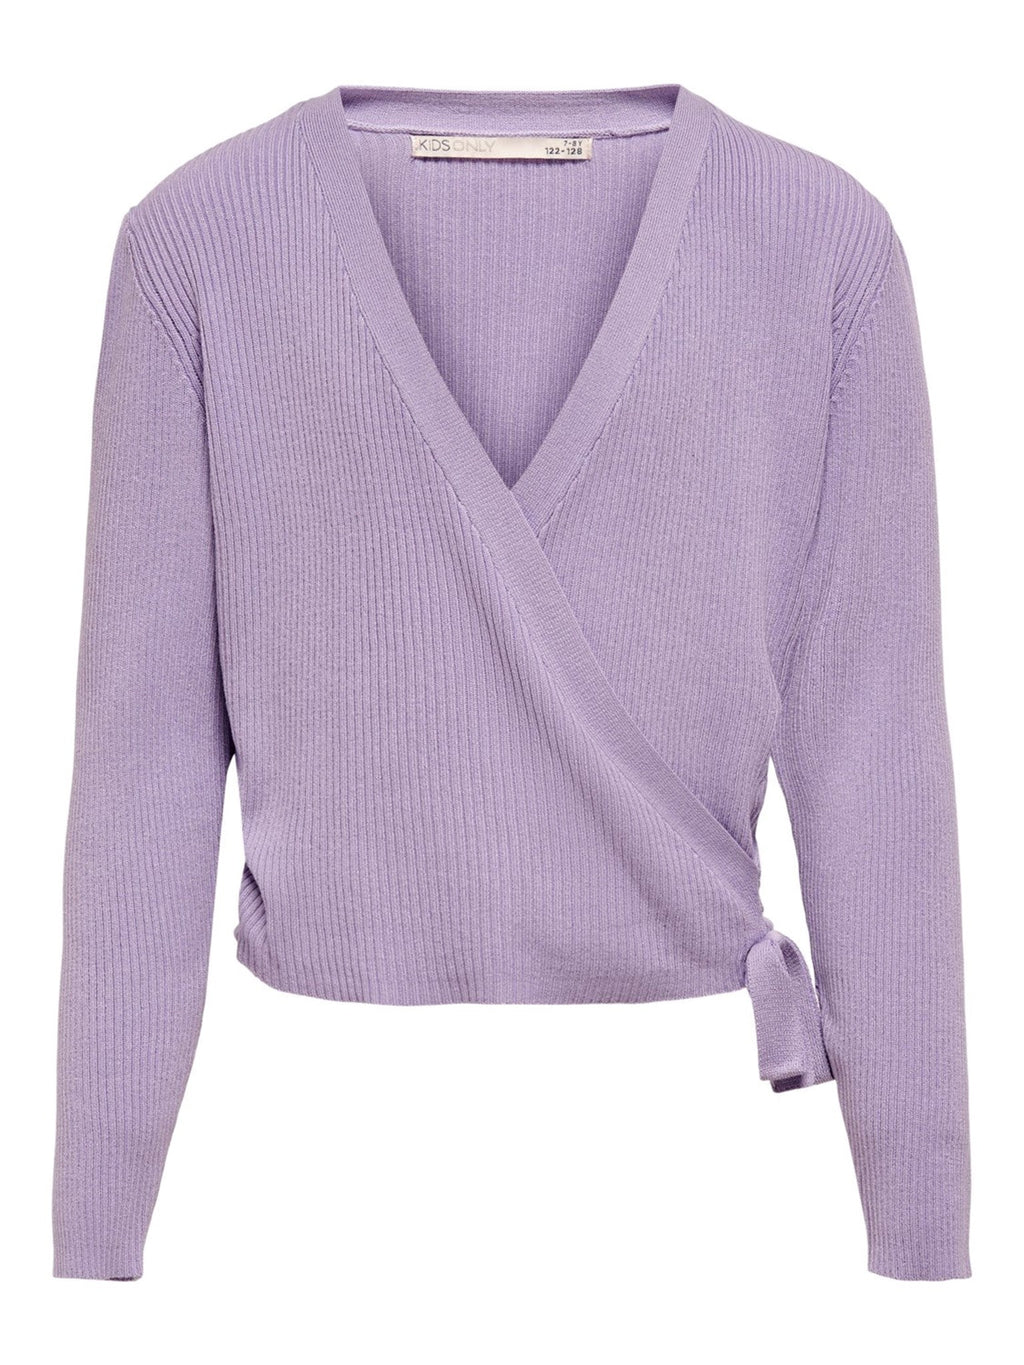 Jolie Wrap genser - Lavender